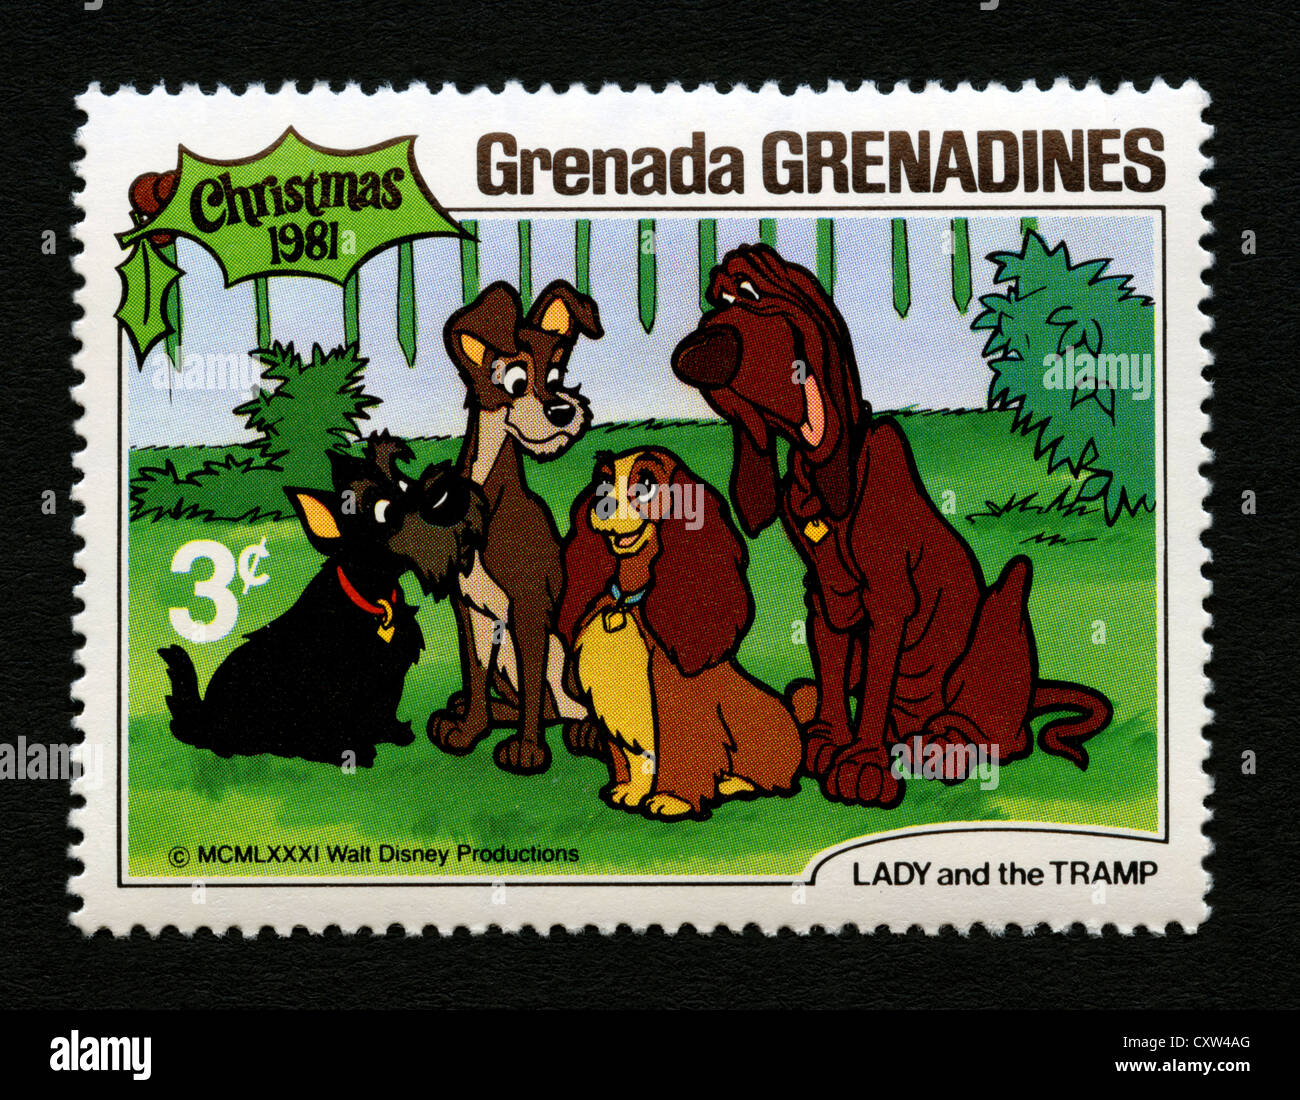 Grenada postage stamp - Lady and the Tramp Disney cartoon Stock Photo